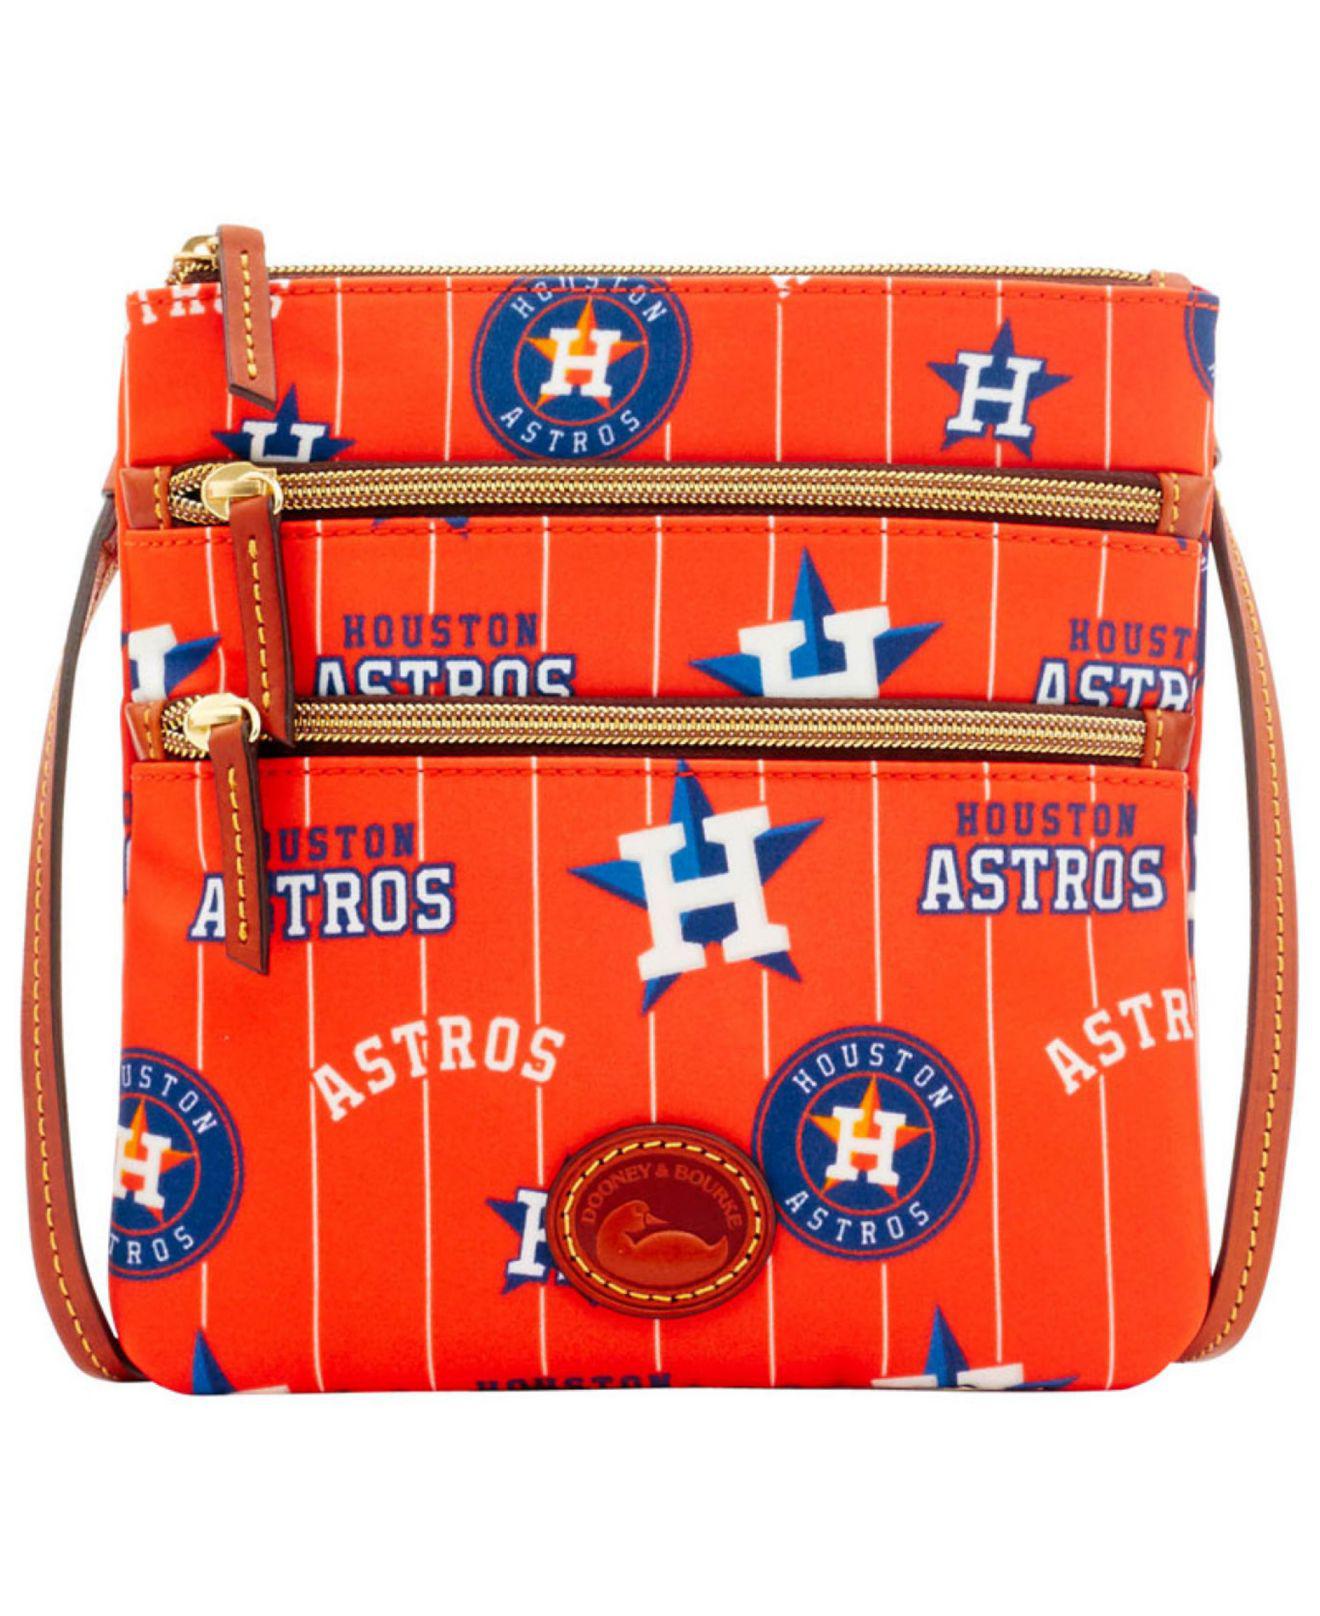 Houston Astros Dooney & Bourke Purse